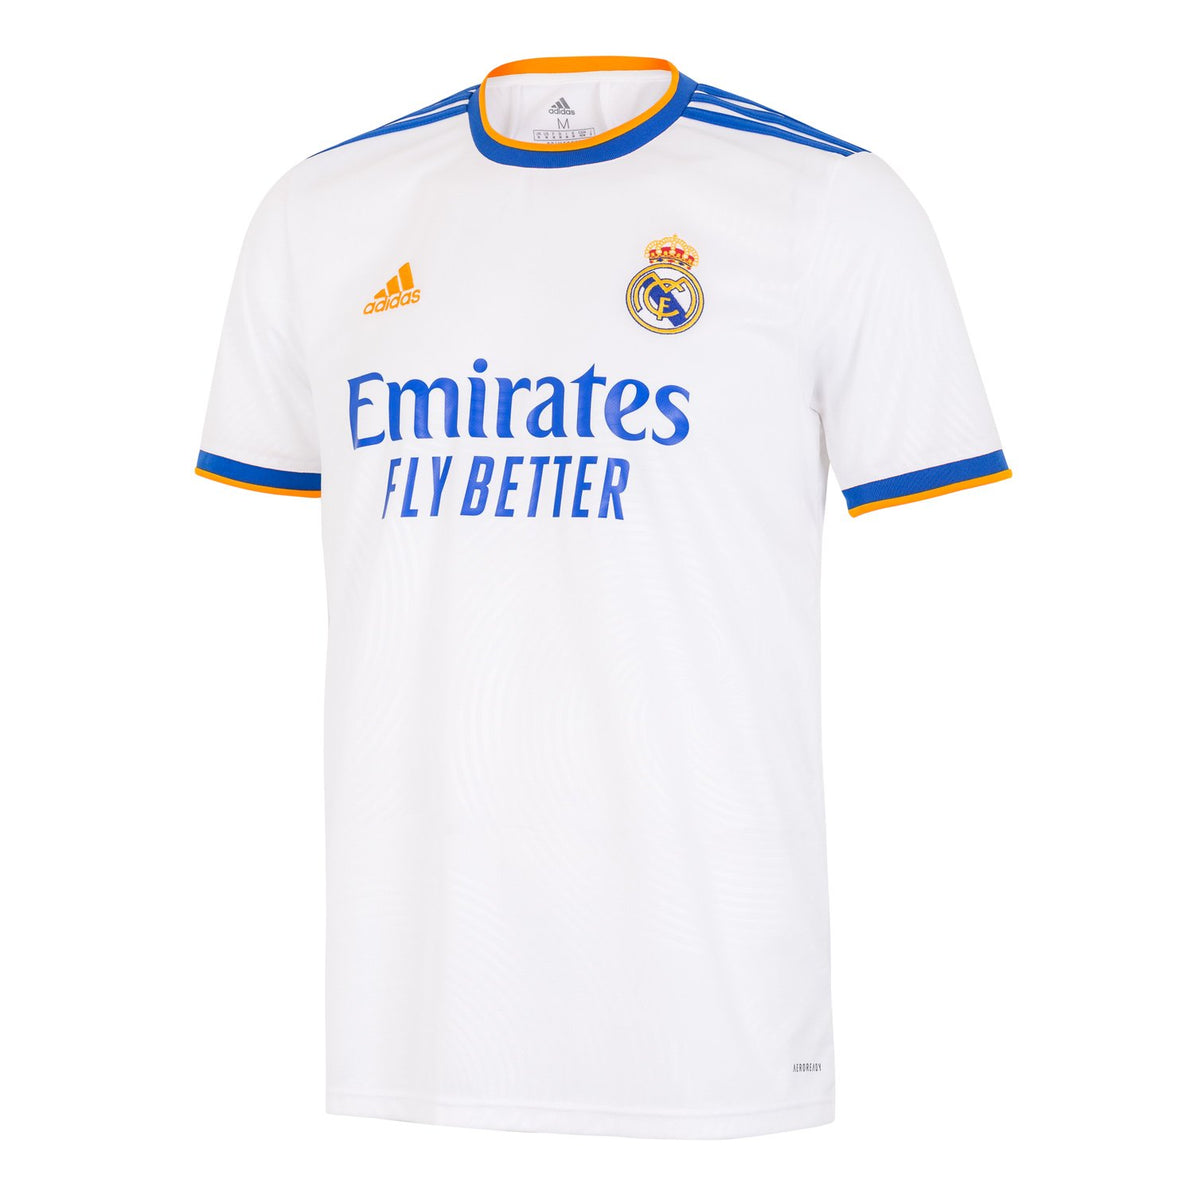 Herren First Team Shirt Real Madrid Real Madrid Weiss 21 22 Real Madrid Cf Eu Shop